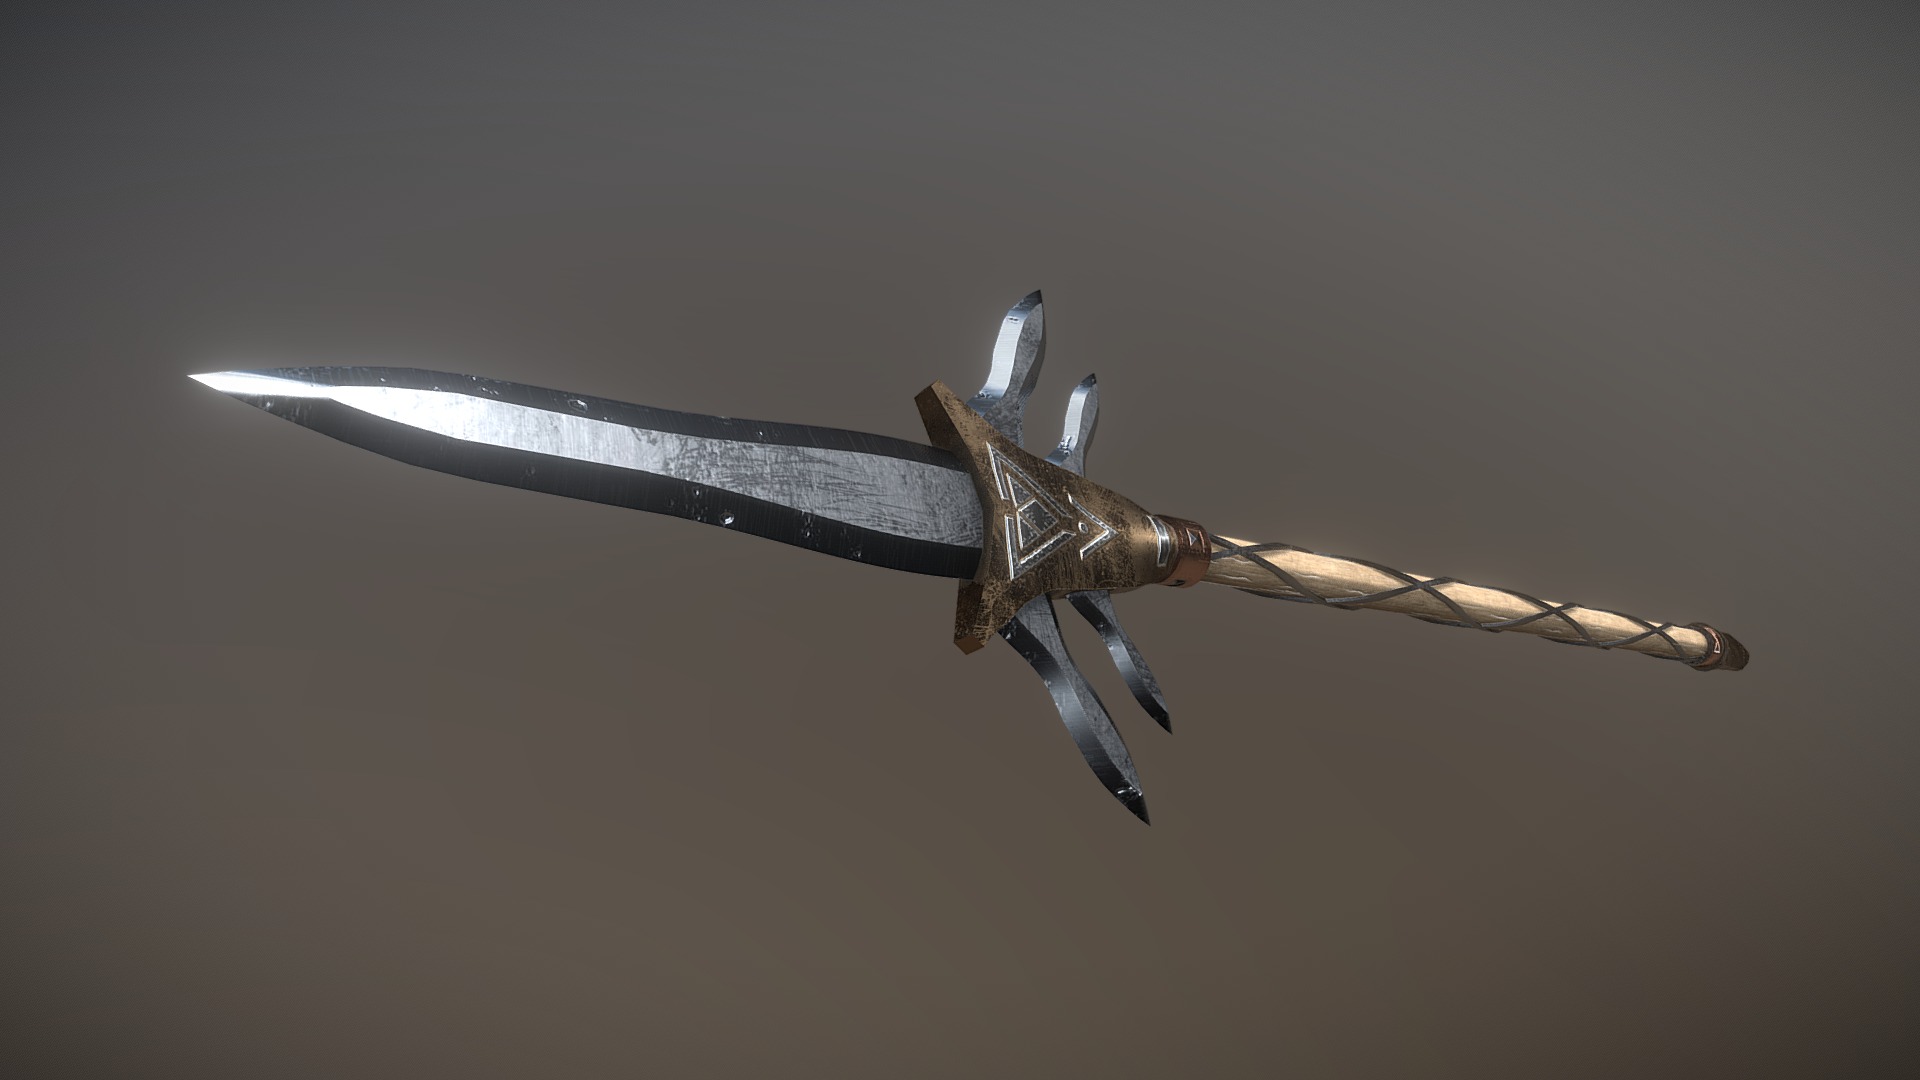 Spear